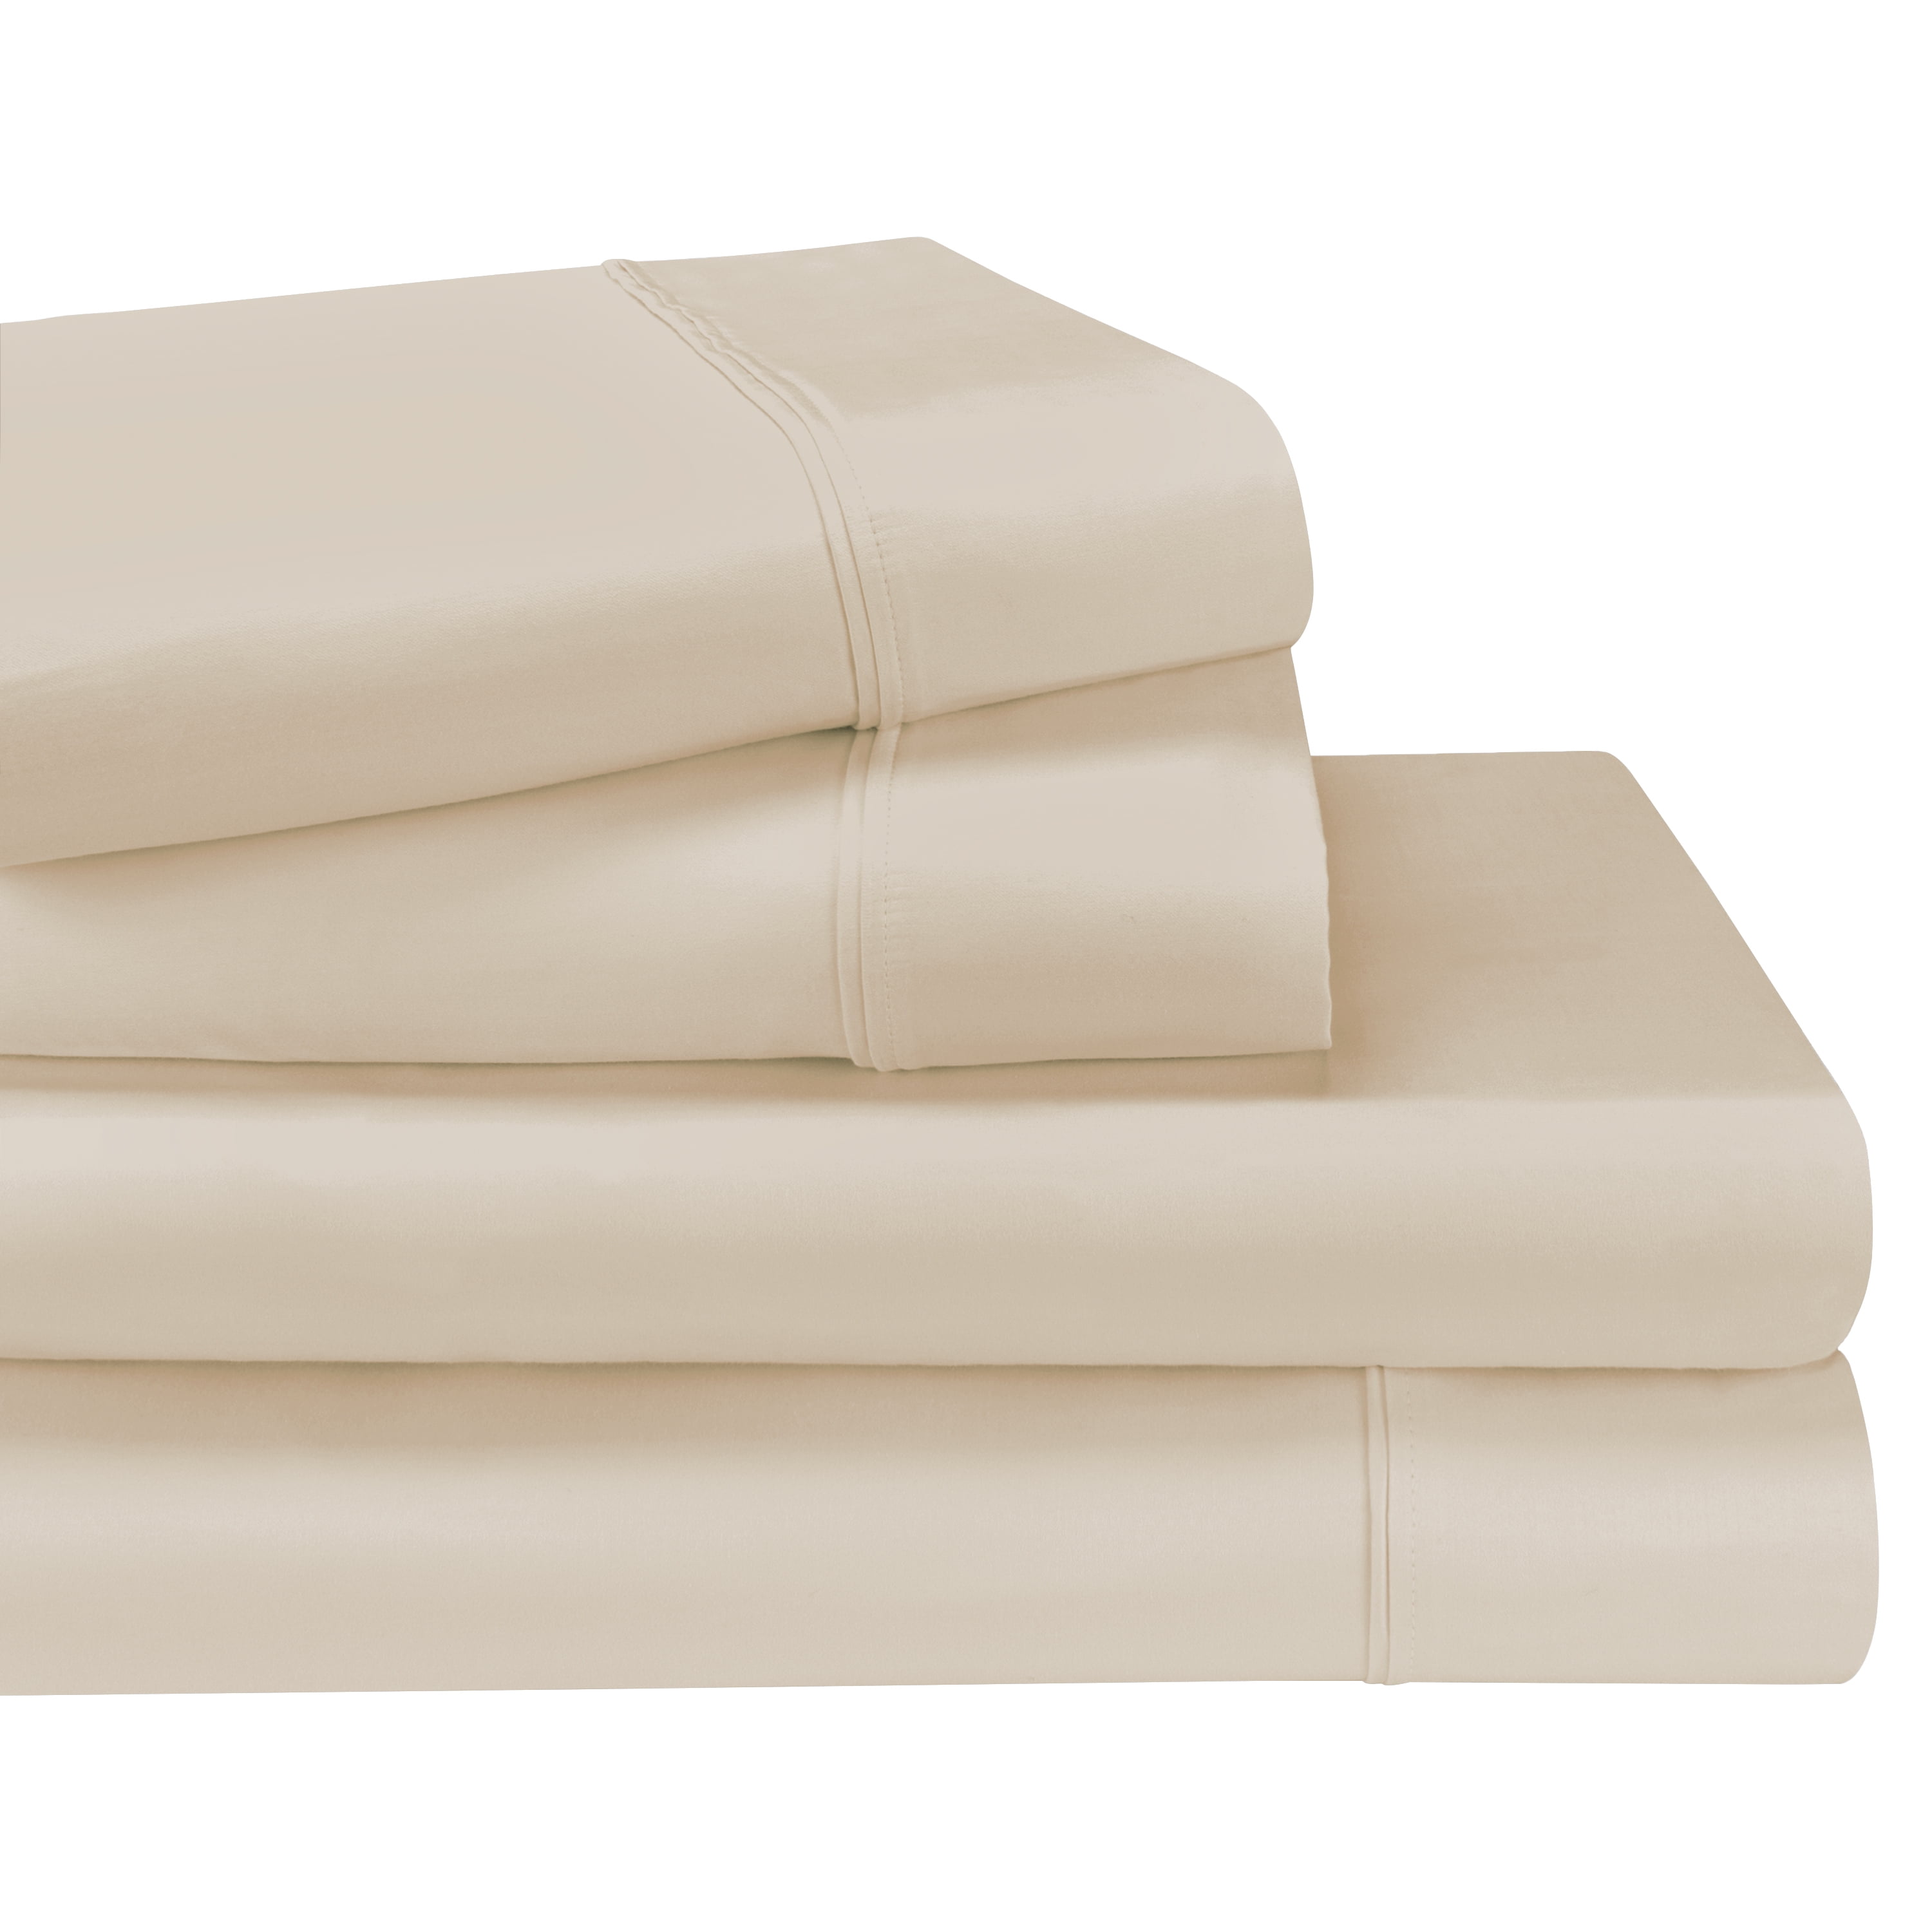 Superior Egyptian Cotton Sheet Set, Queen, Ivory - Walmart.com